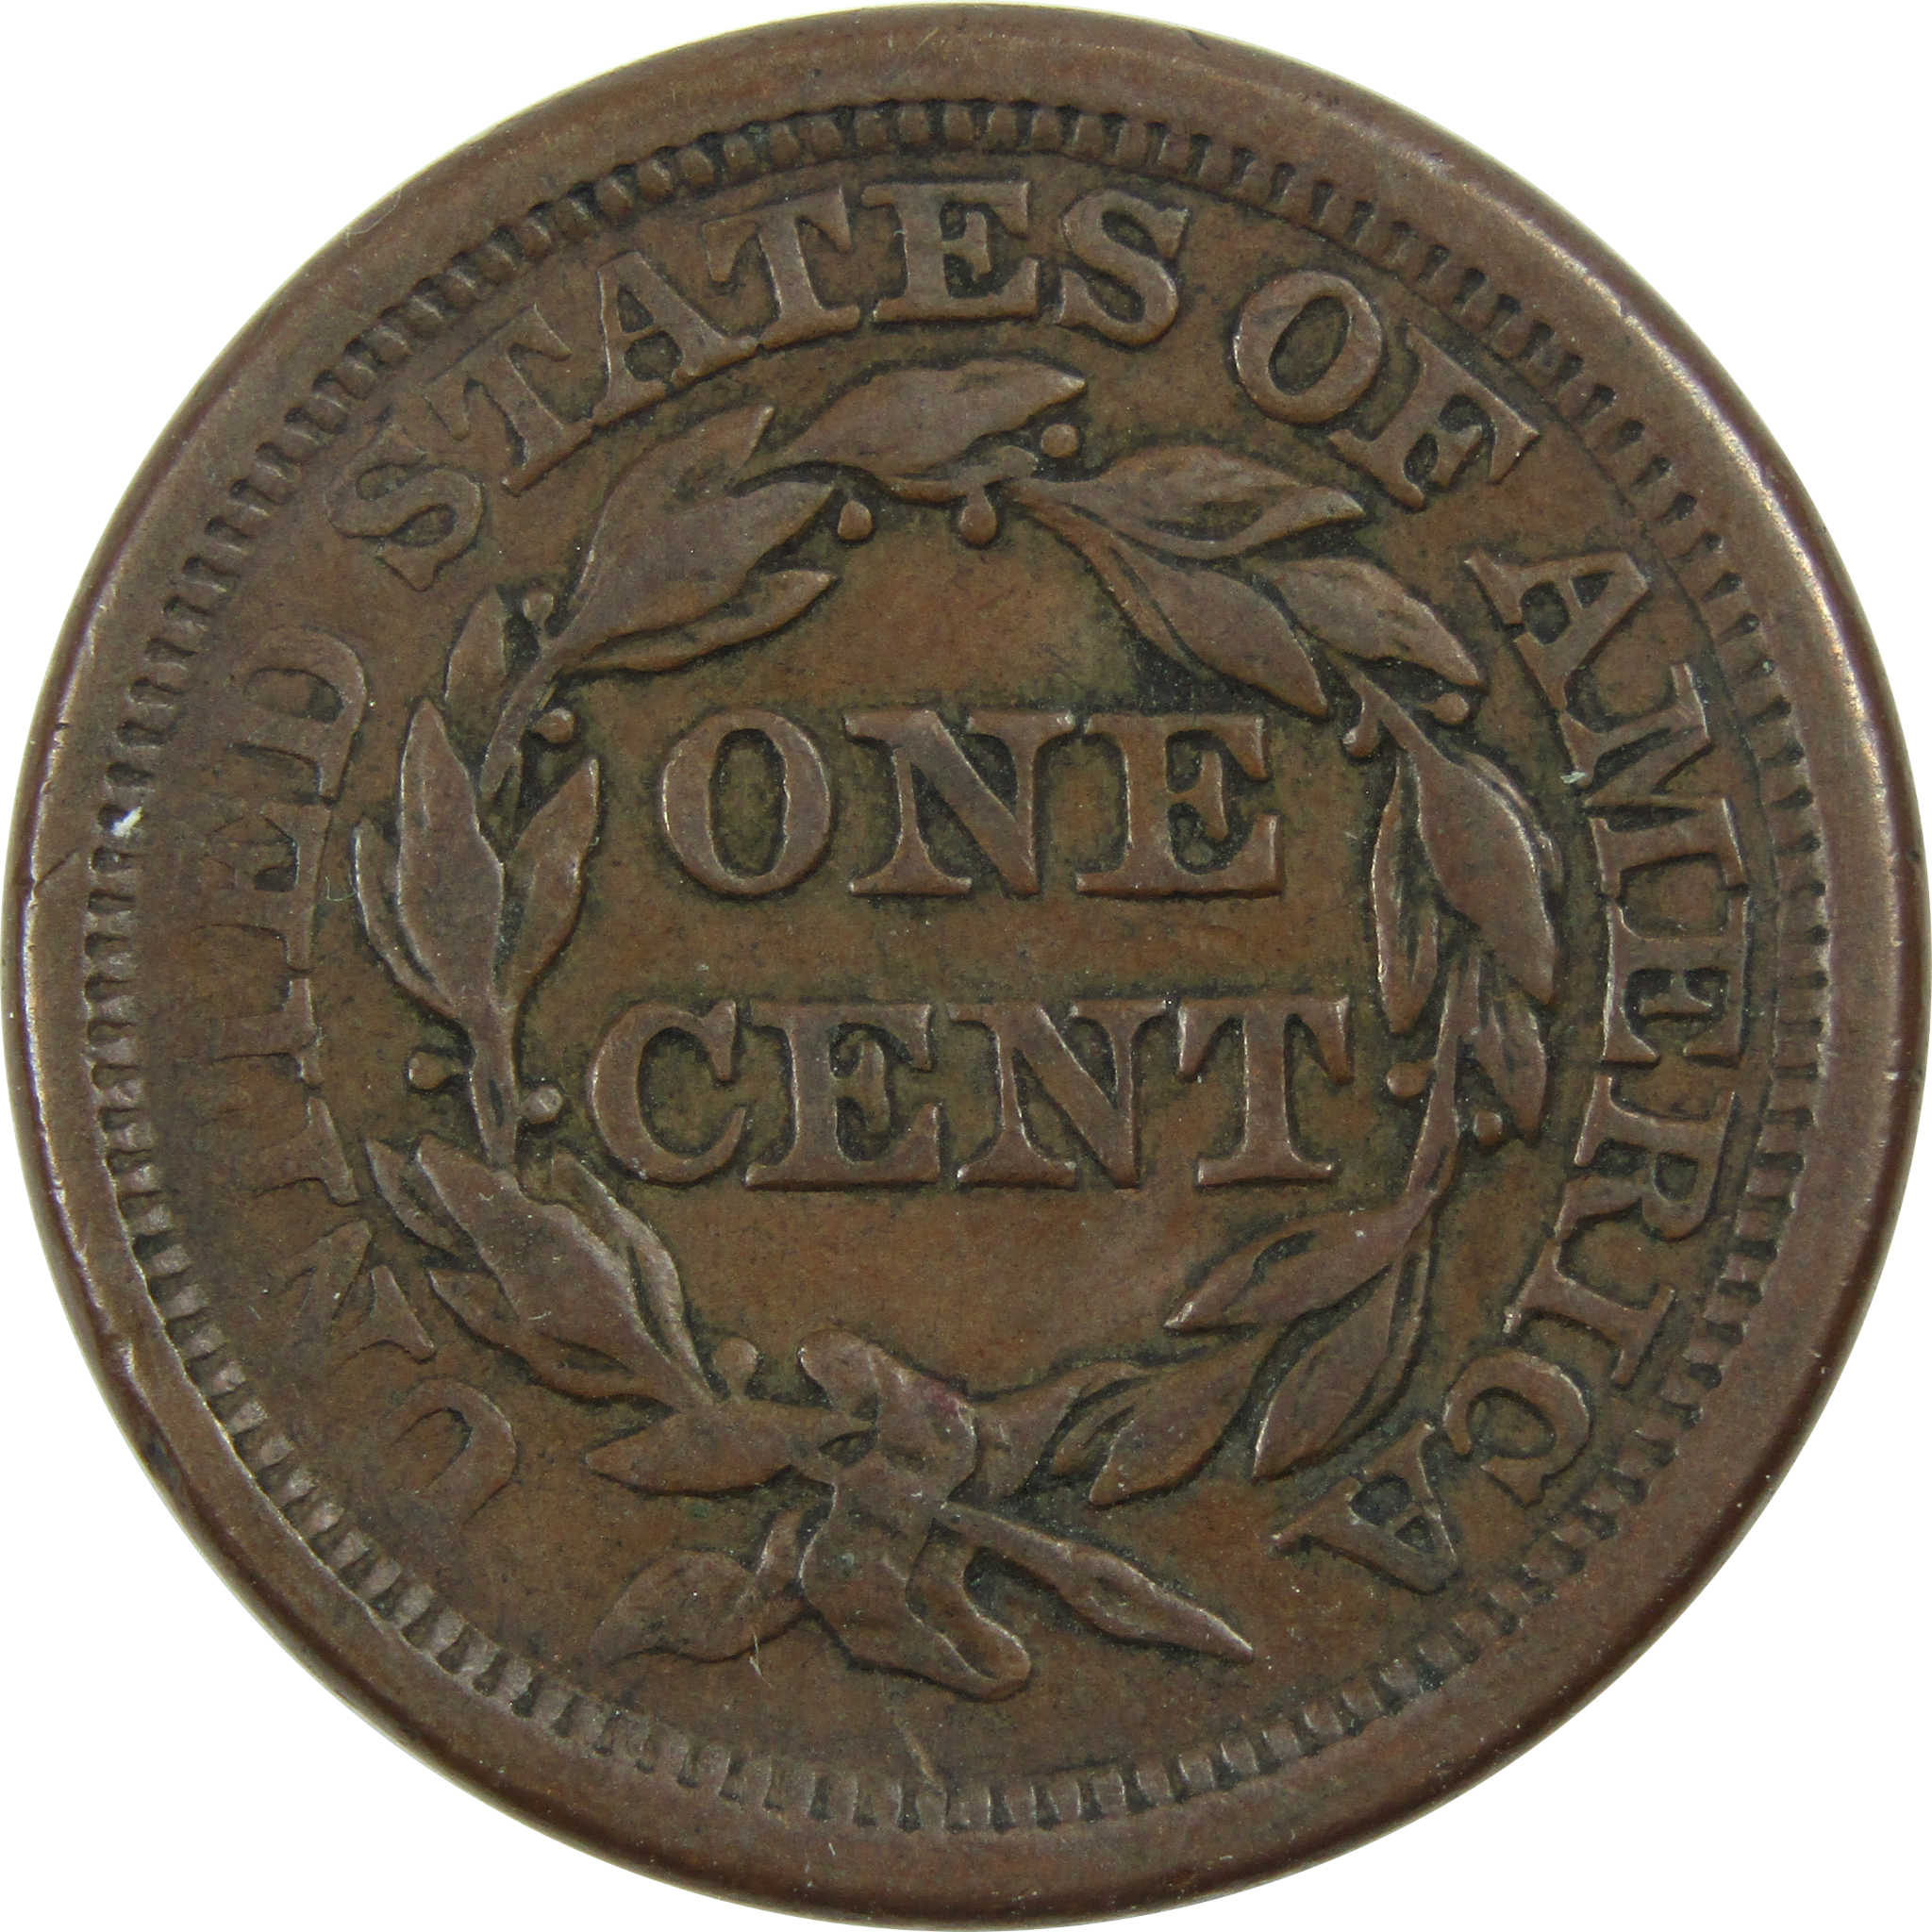 1856 Slanting 5 Braided Hair Large Cent VF Very Fine Copper SKU:I13411